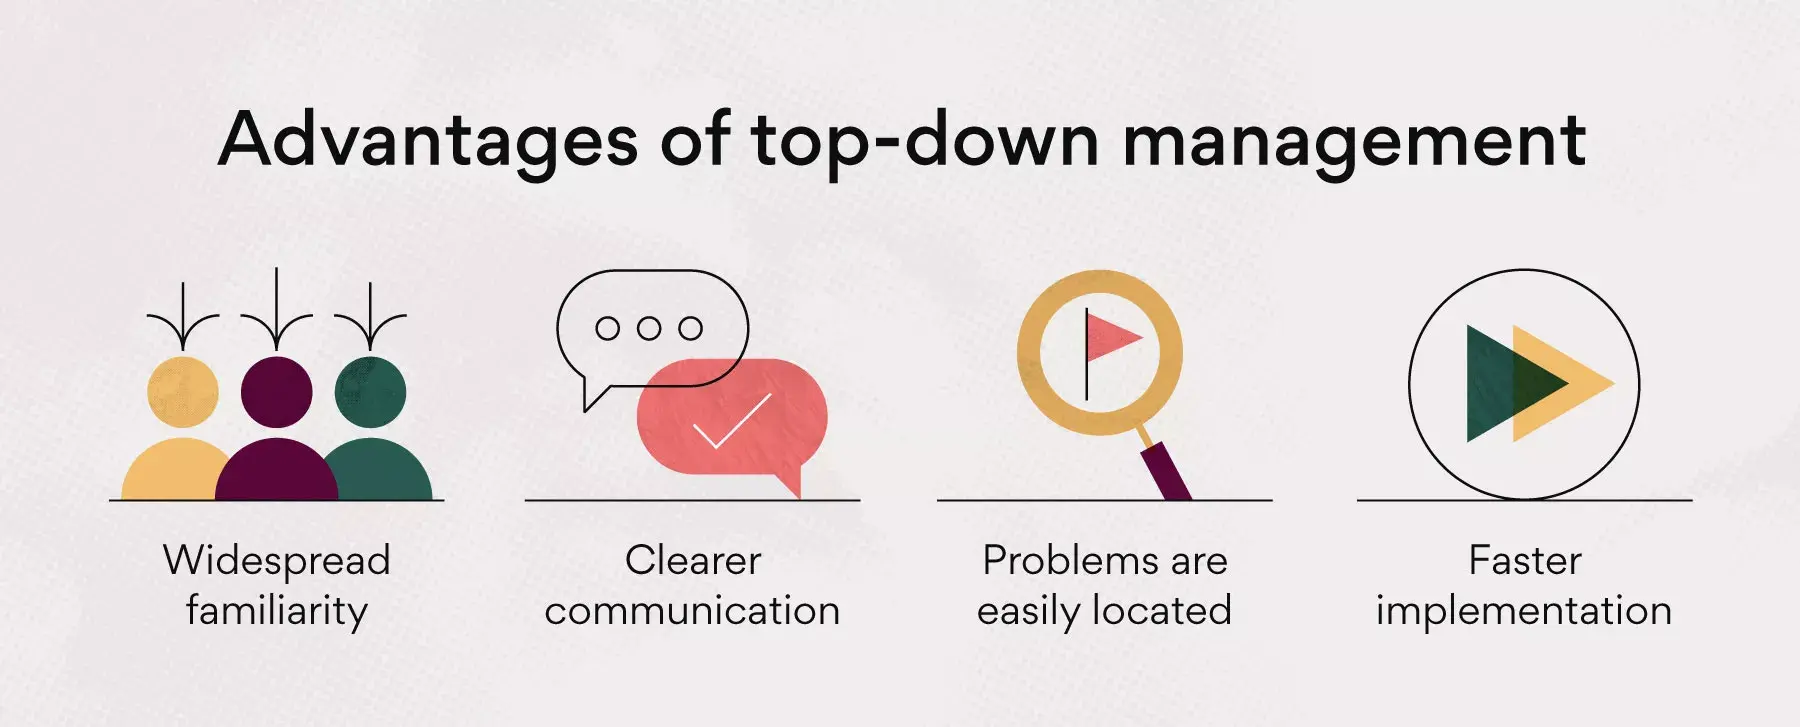 [inline illustration] Advantages of top-down management (infographic)